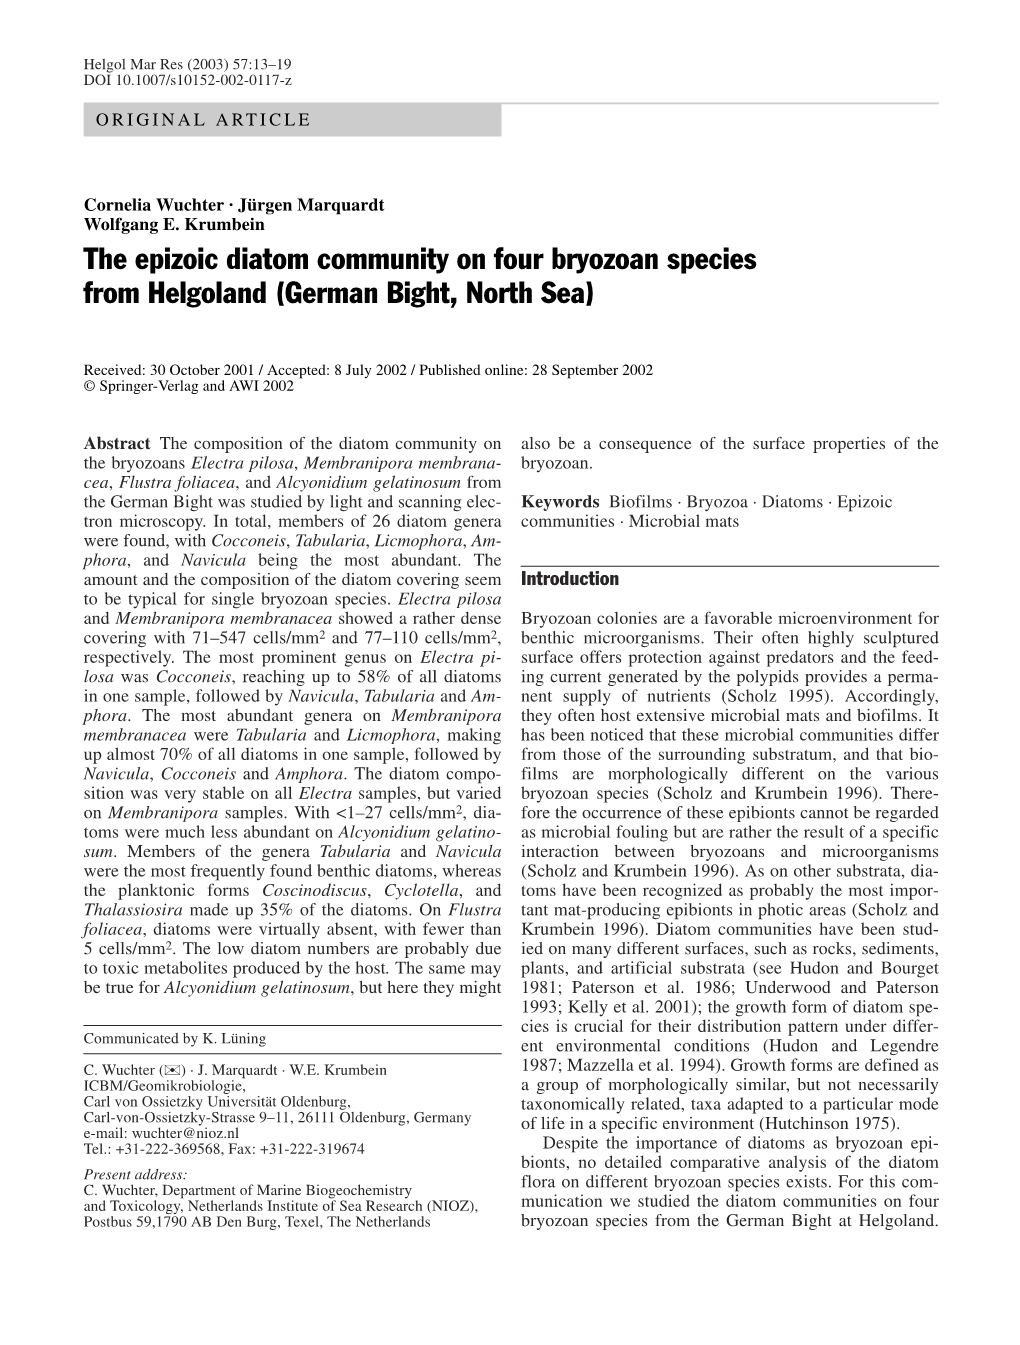 The Epizoic Diatom Community on Four Bryozoan Species from Helgoland (German Bight, North Sea)